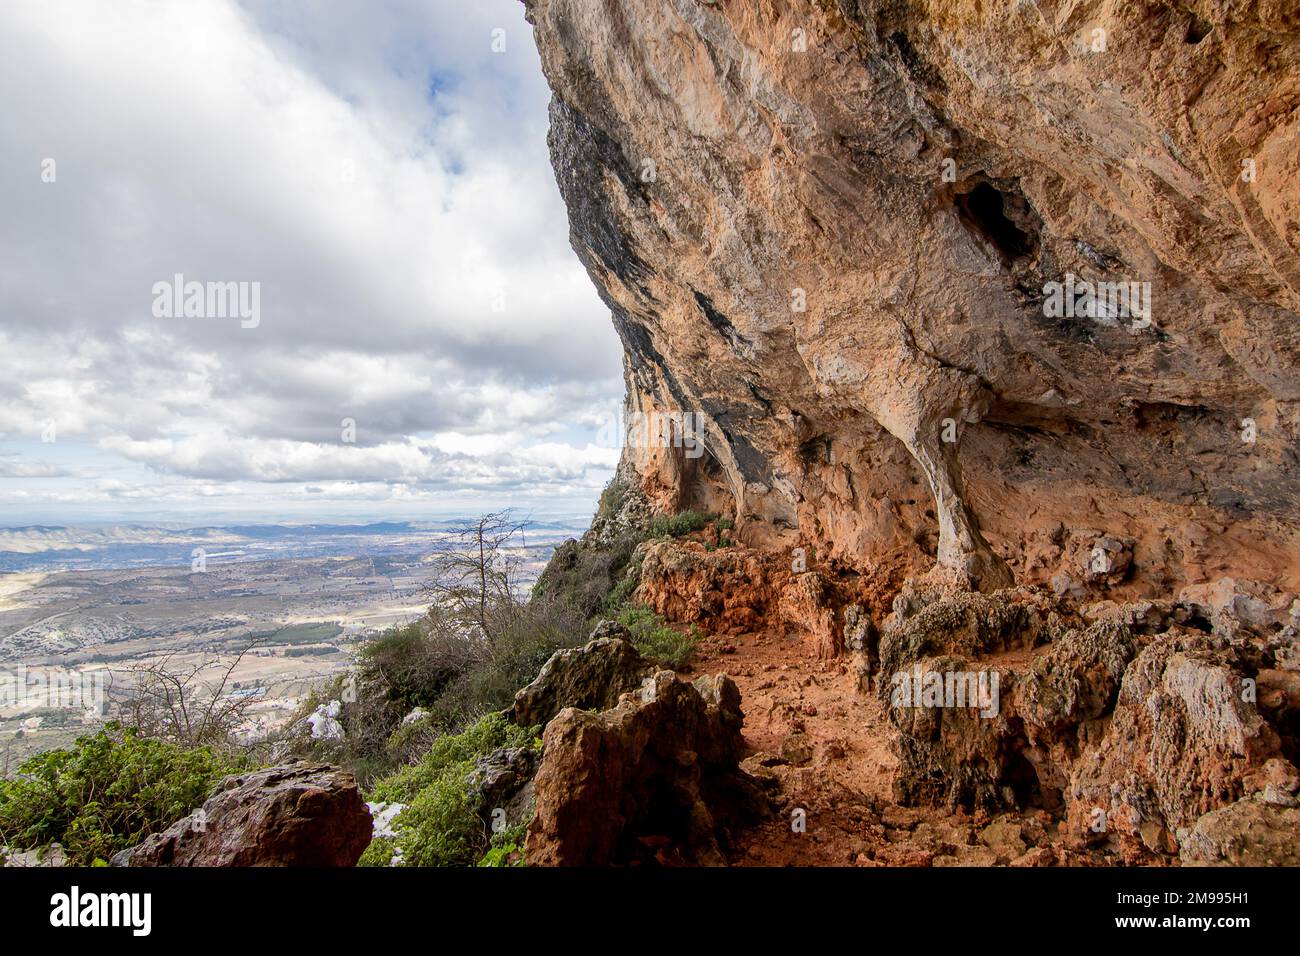 Bolumini cave over snowy landscape with blue sky. Mariola Natural Park, Agres, Alicante, Spain. Stock Photo